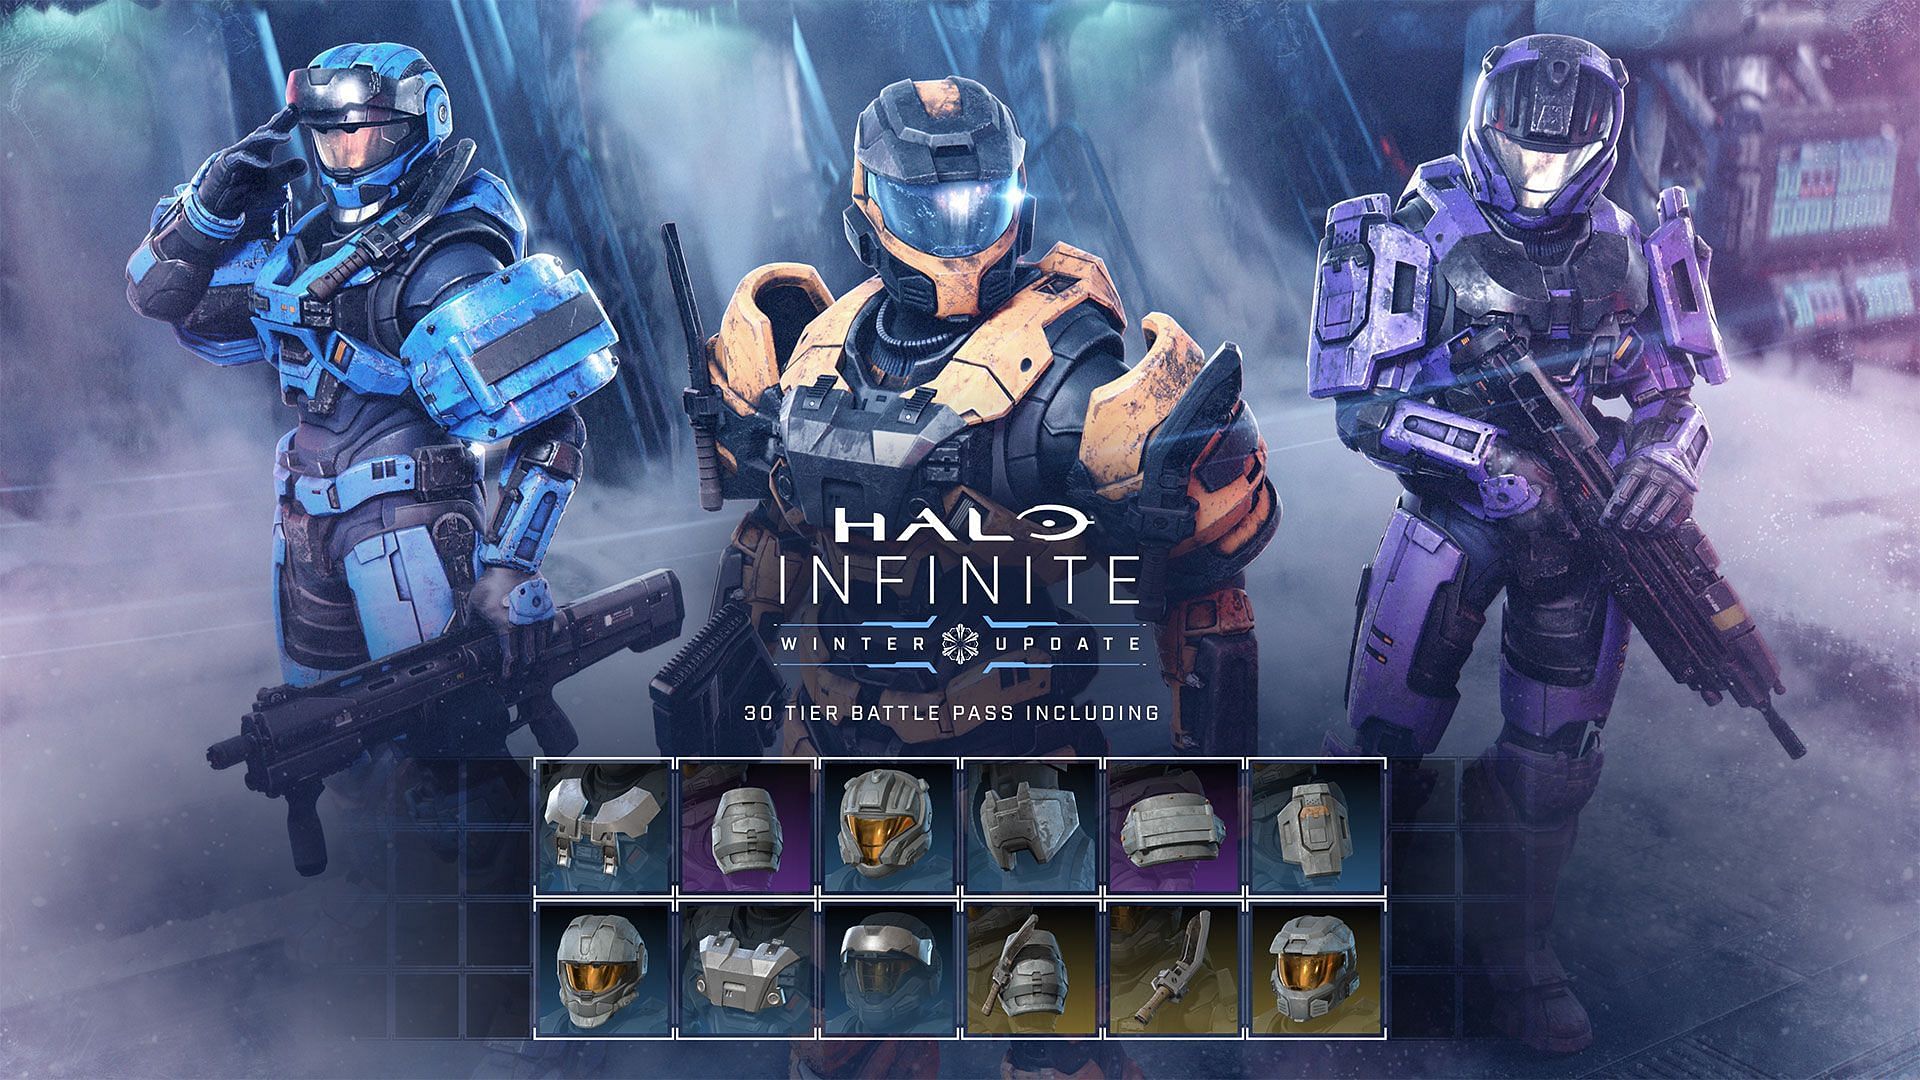 Winter update brings new items to Halo Infinite (image via Xbox)